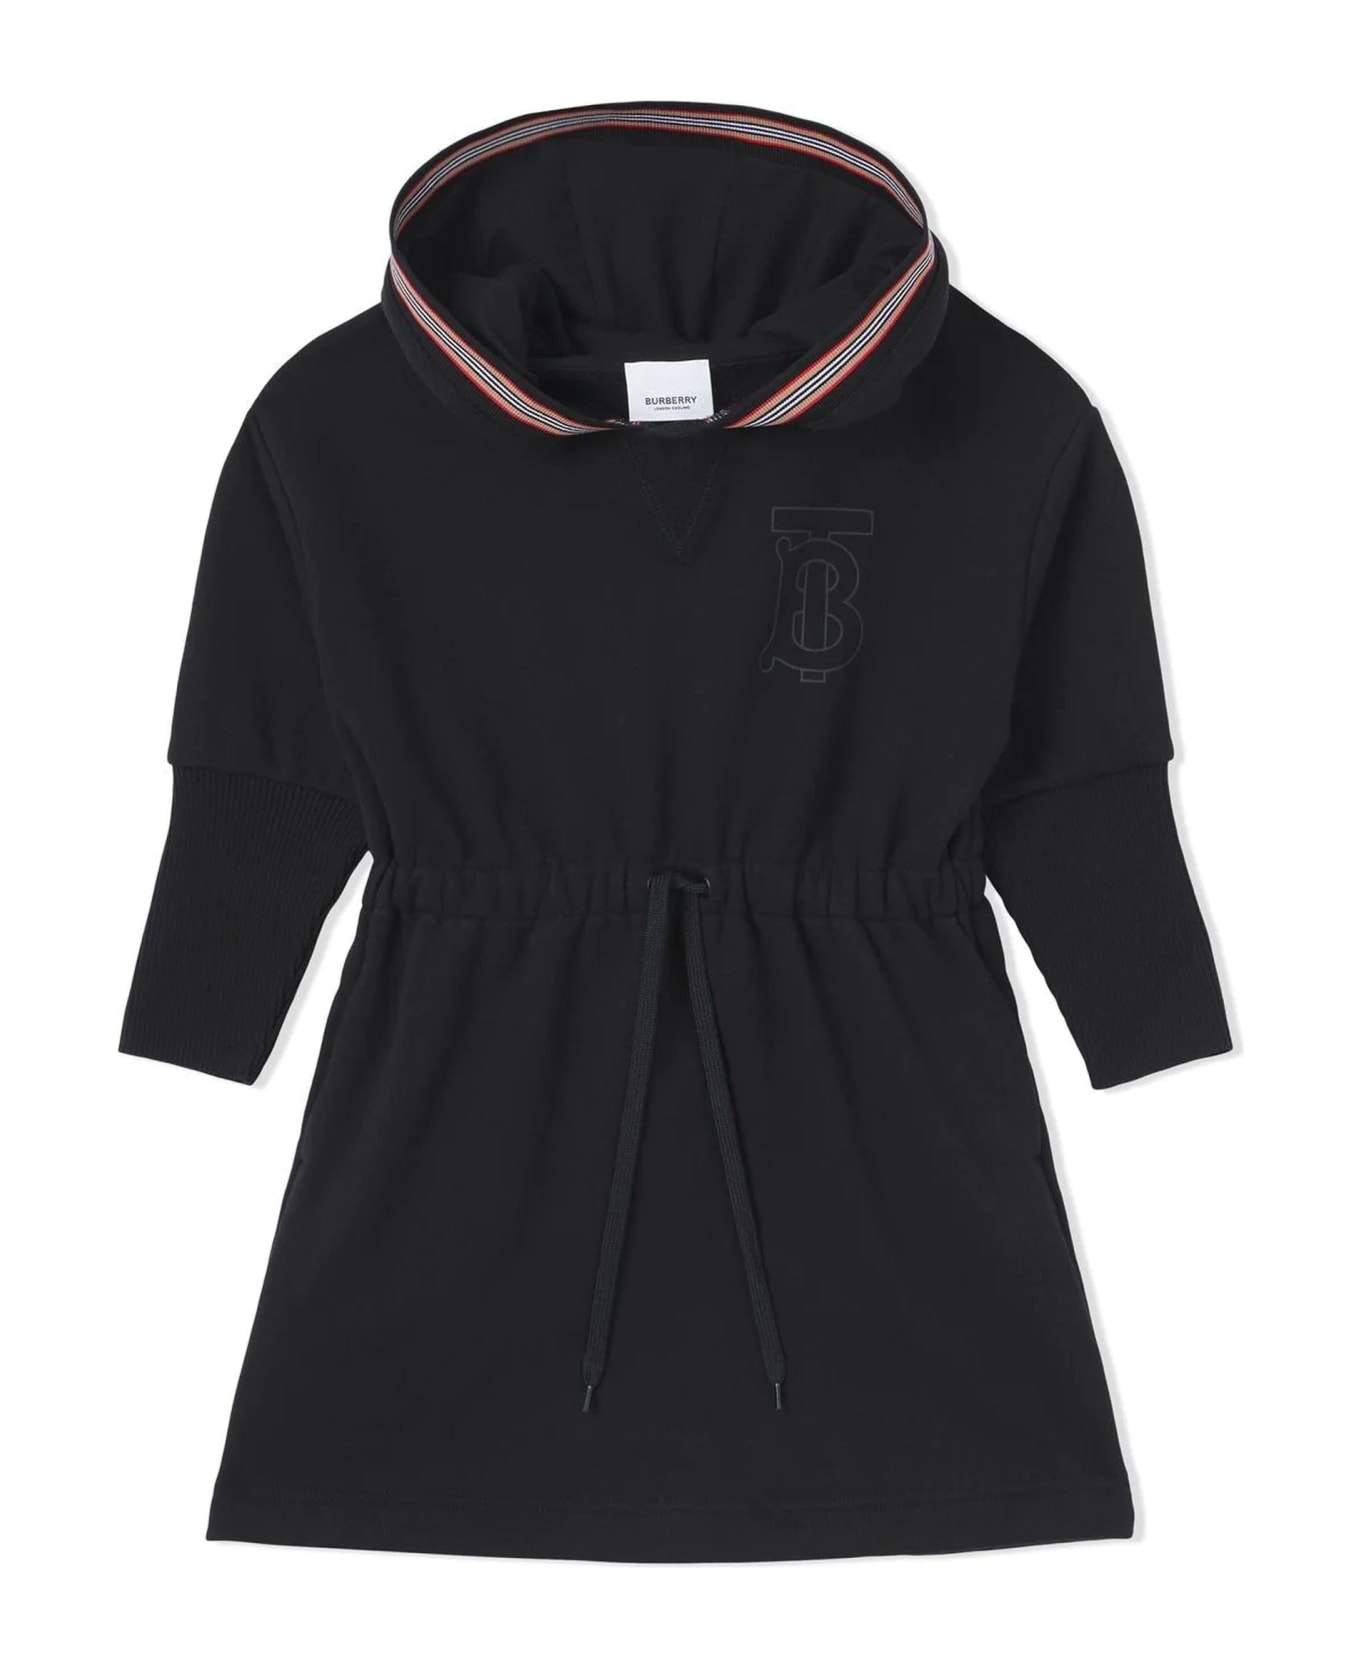 Burberry Black Cotton Dress - Nero